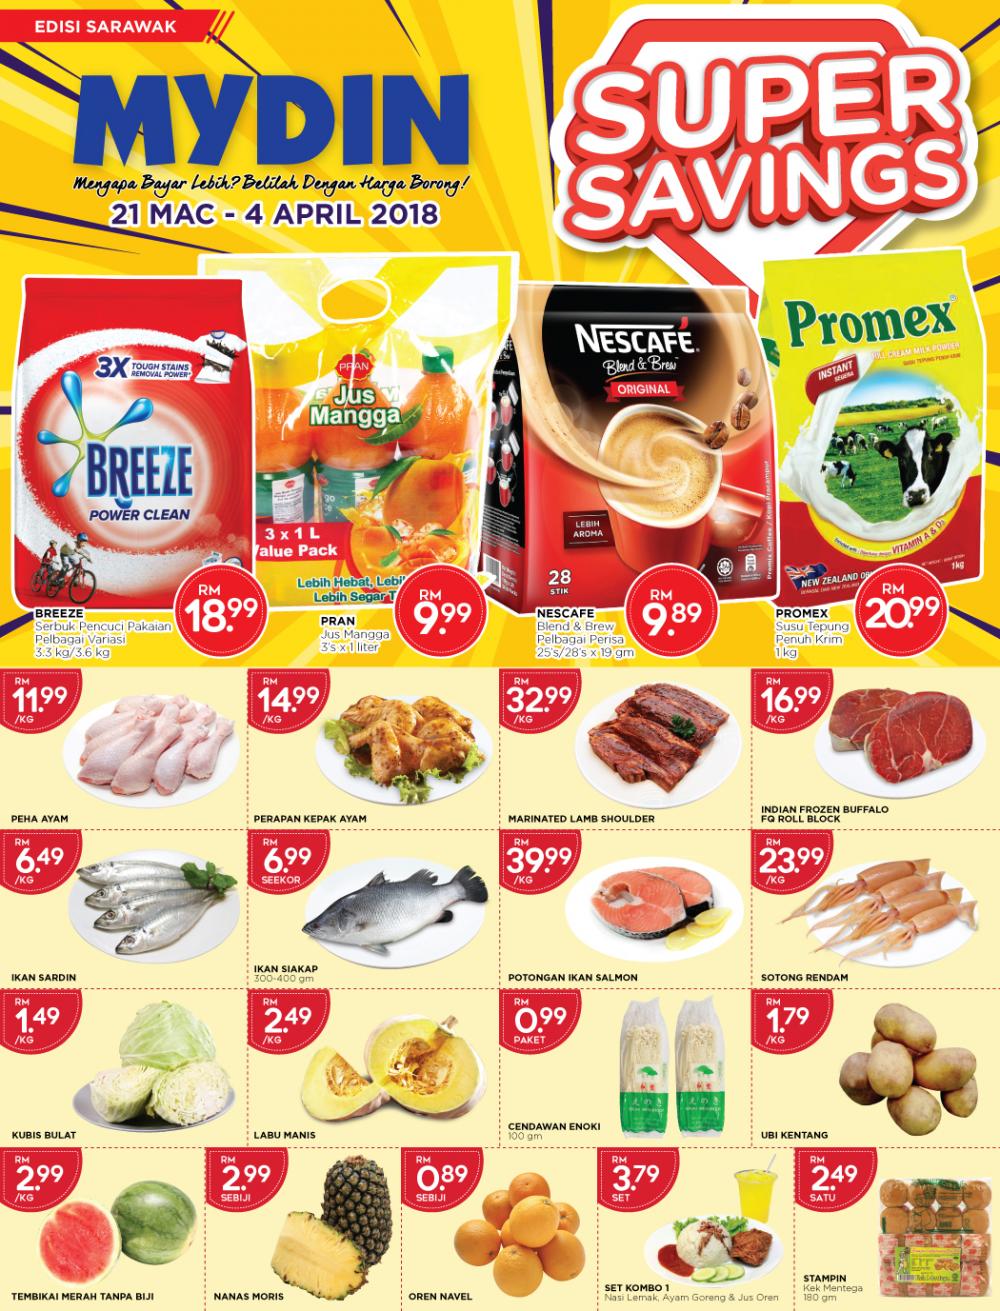 MYDIN Super Savings Promotion Catalogue at Sarawak (21 March 2019 - 4 April 2019)